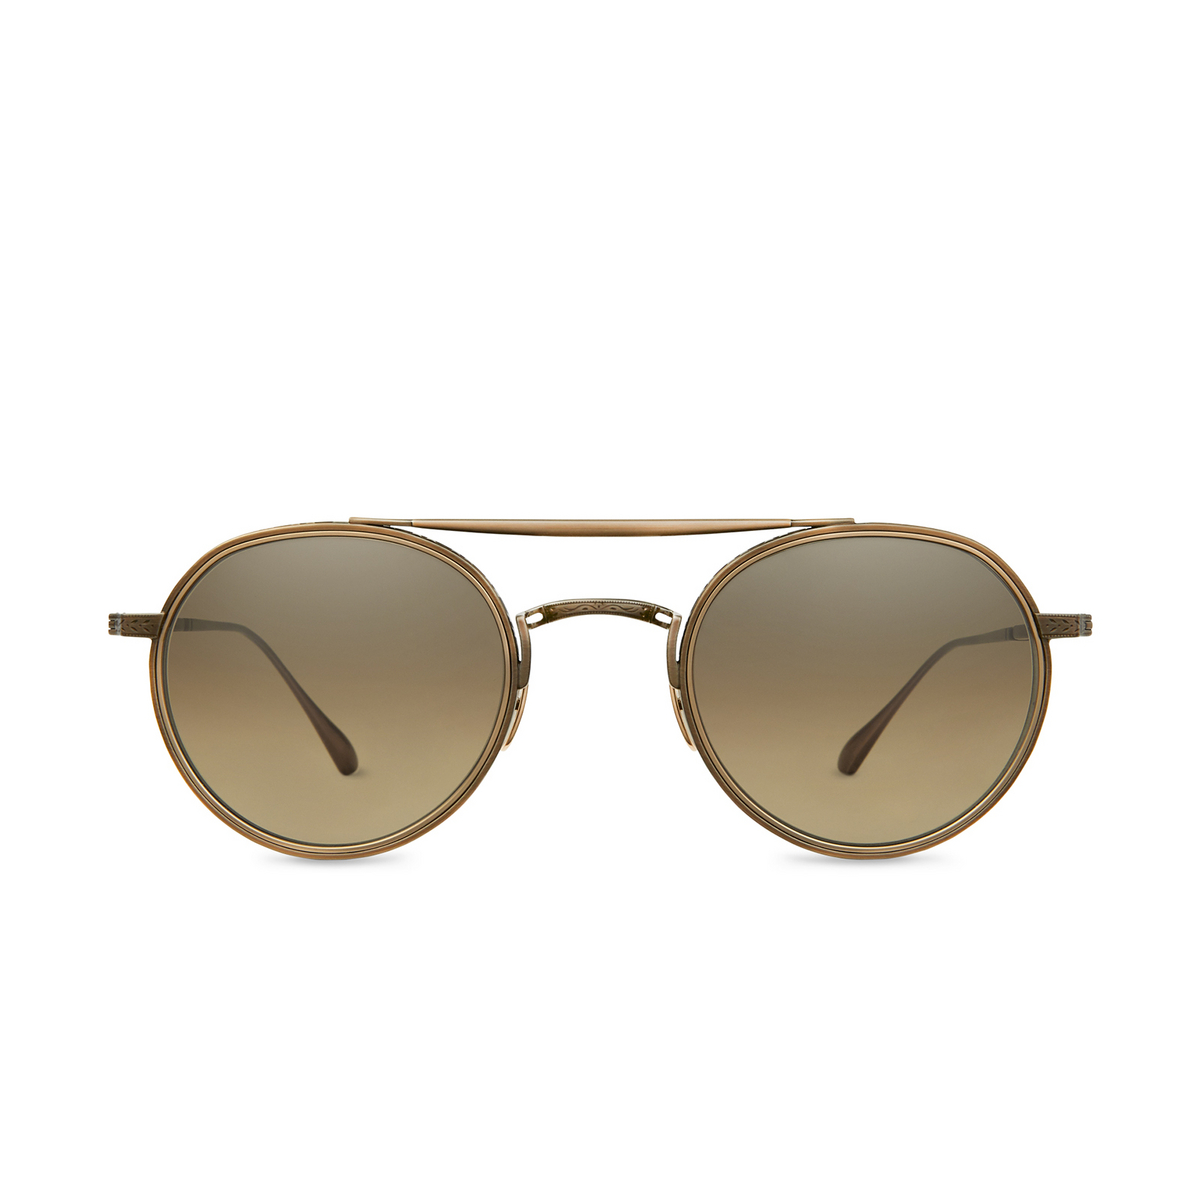 Mr. Leight LEXINGTON S Sunglasses ATG/SMKY - front view